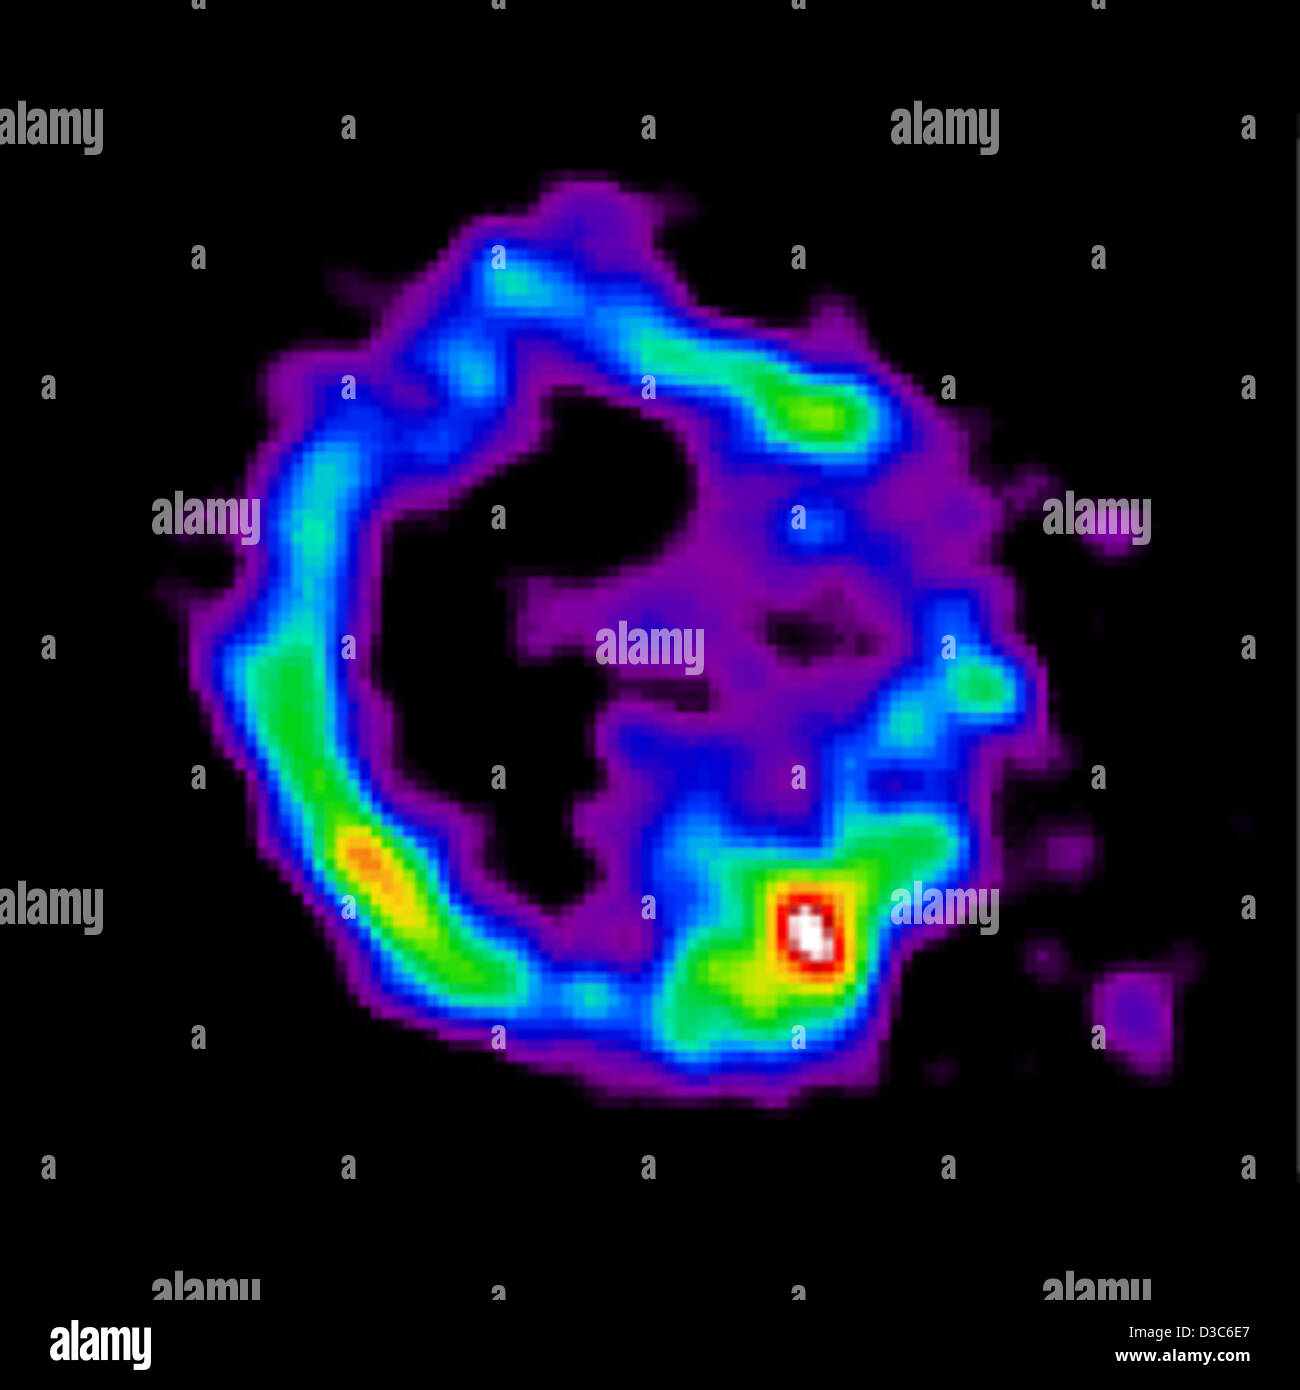 E0102-72,3 kleine Magellansche Wolke Astronomie Chandra x-ray Observatory Teleskop Chandra X-Ray Chandraxrayobservatory Chandraxray Stockfoto